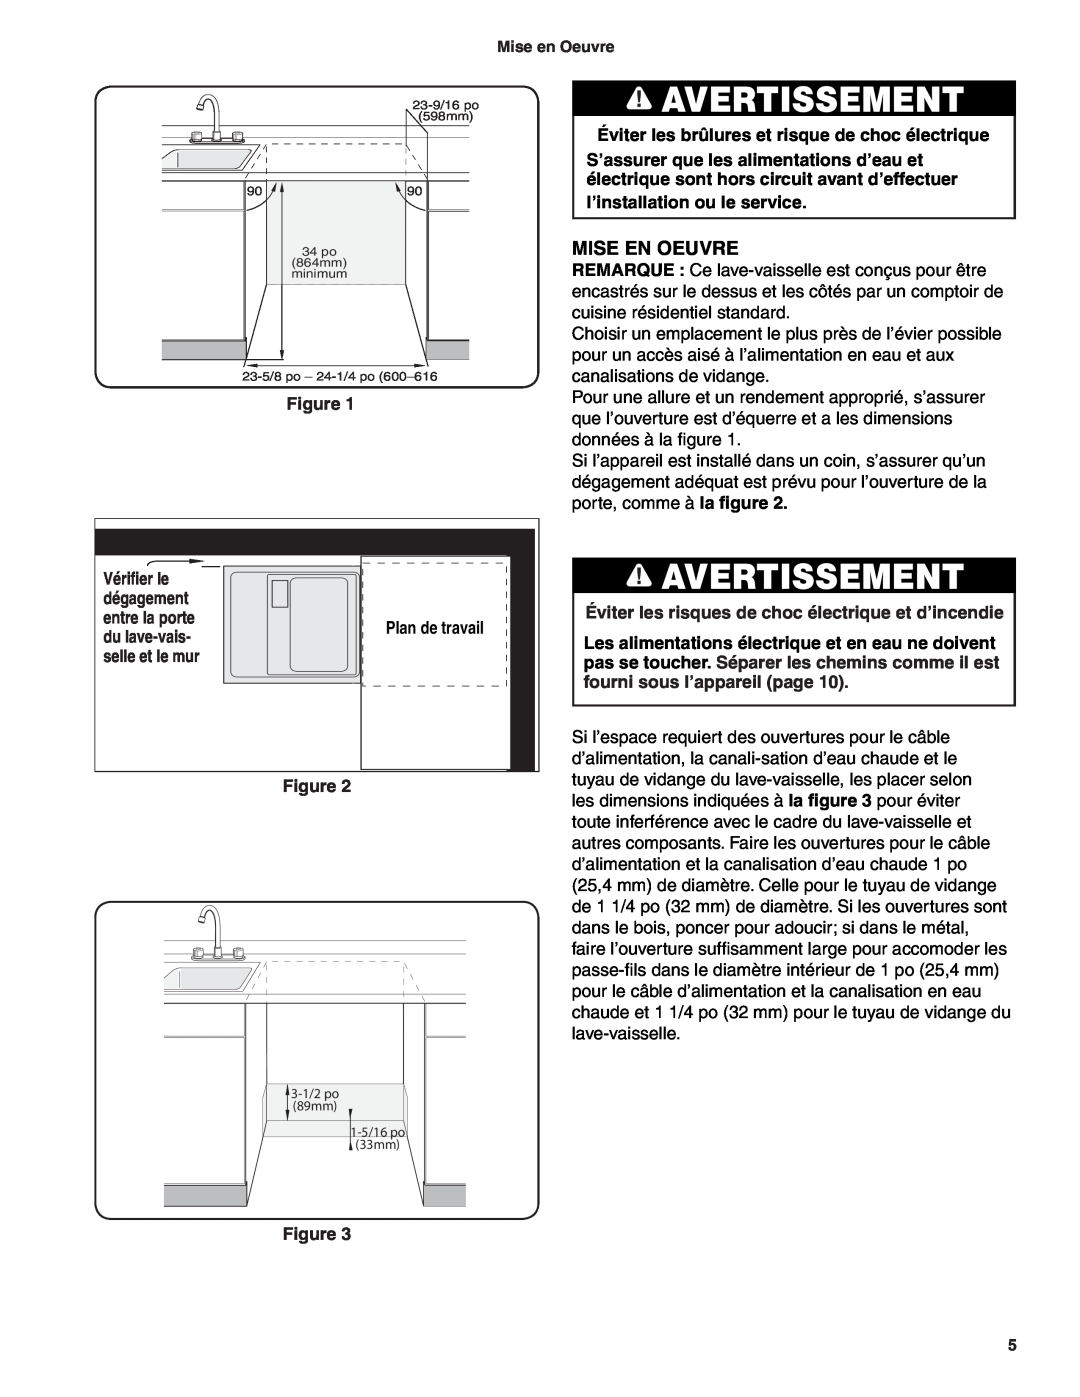 Bosch Appliances BSH Dishwasher important safety instructions Avertissement, Mise En Oeuvre 